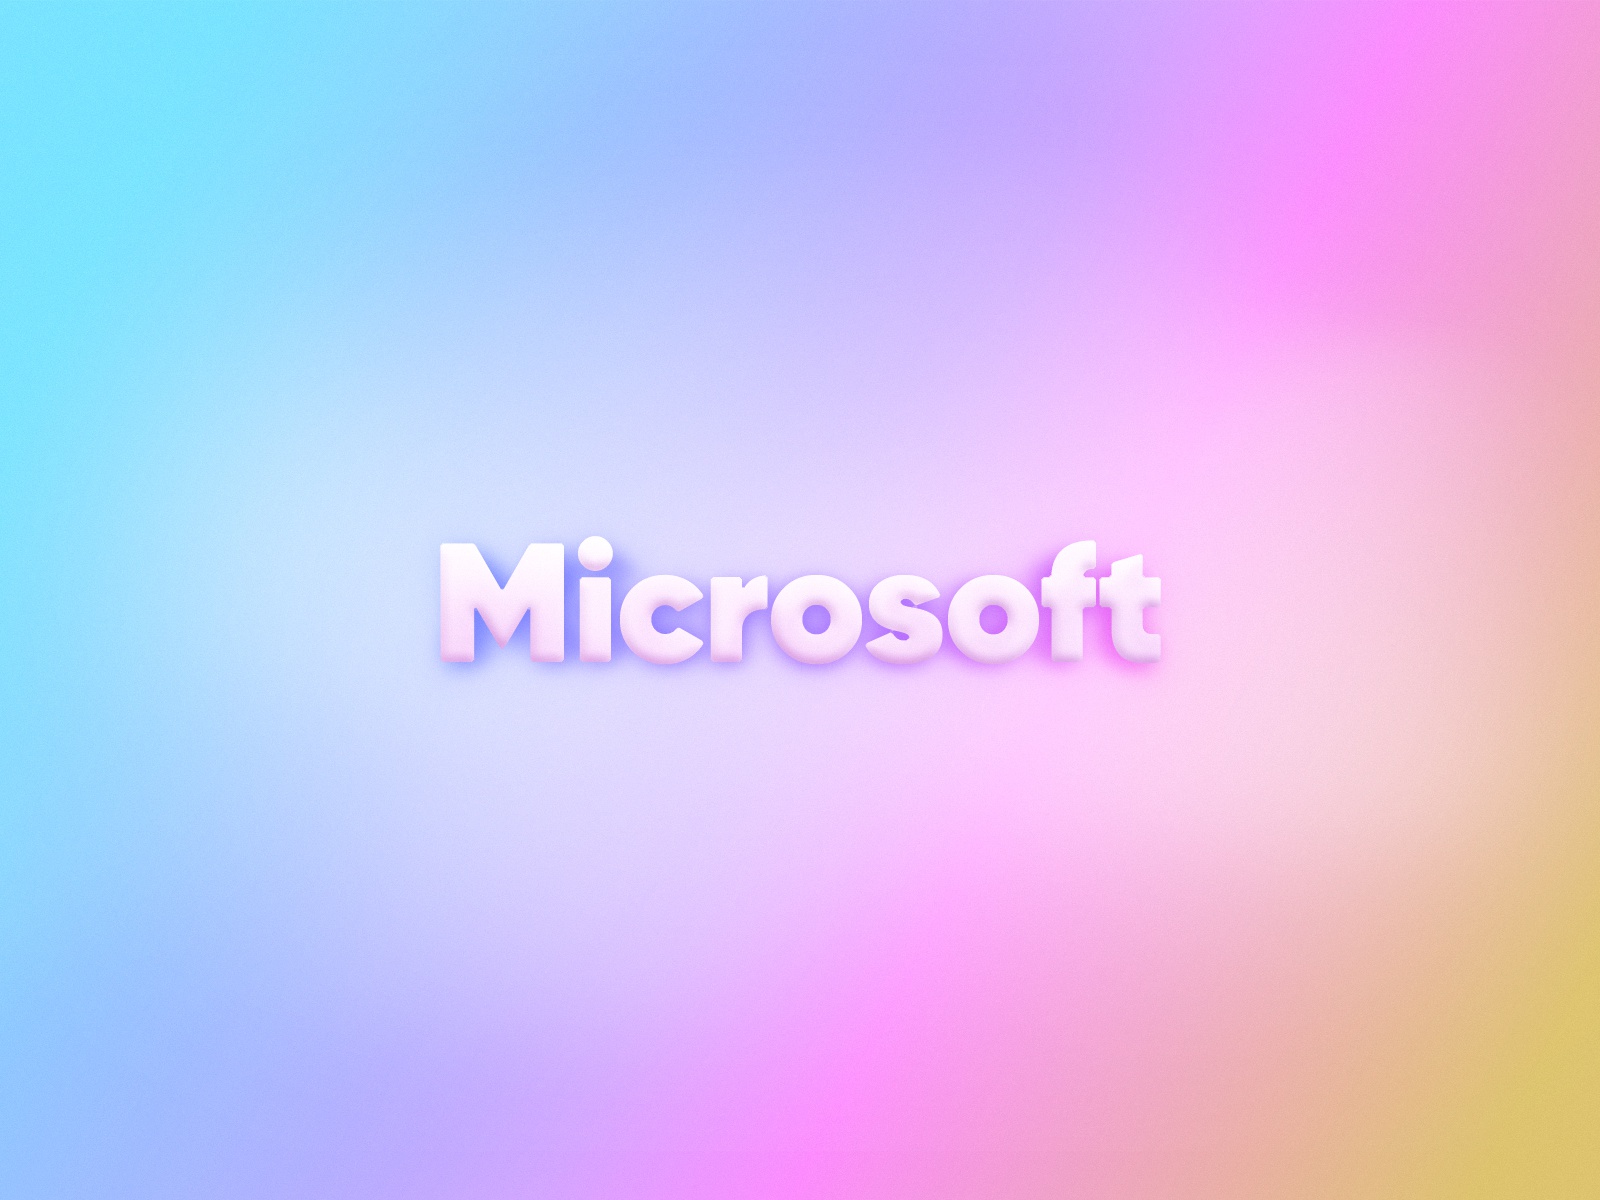 Windows 10 Purple Gradient Wallpapers